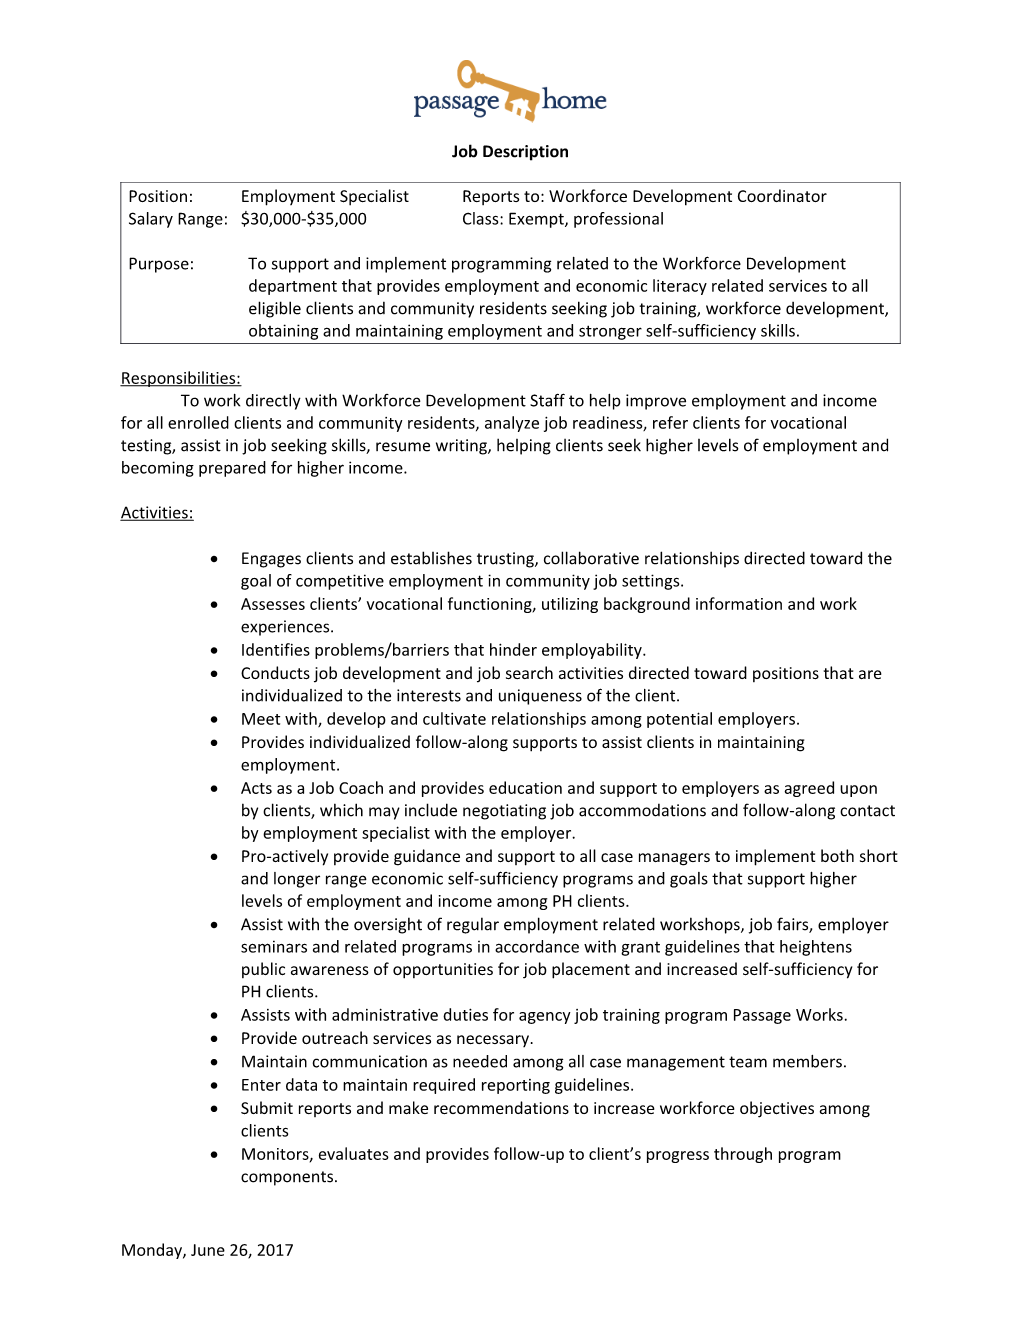 Position:Employment Specialist Reports To: Workforce Development Coordinator